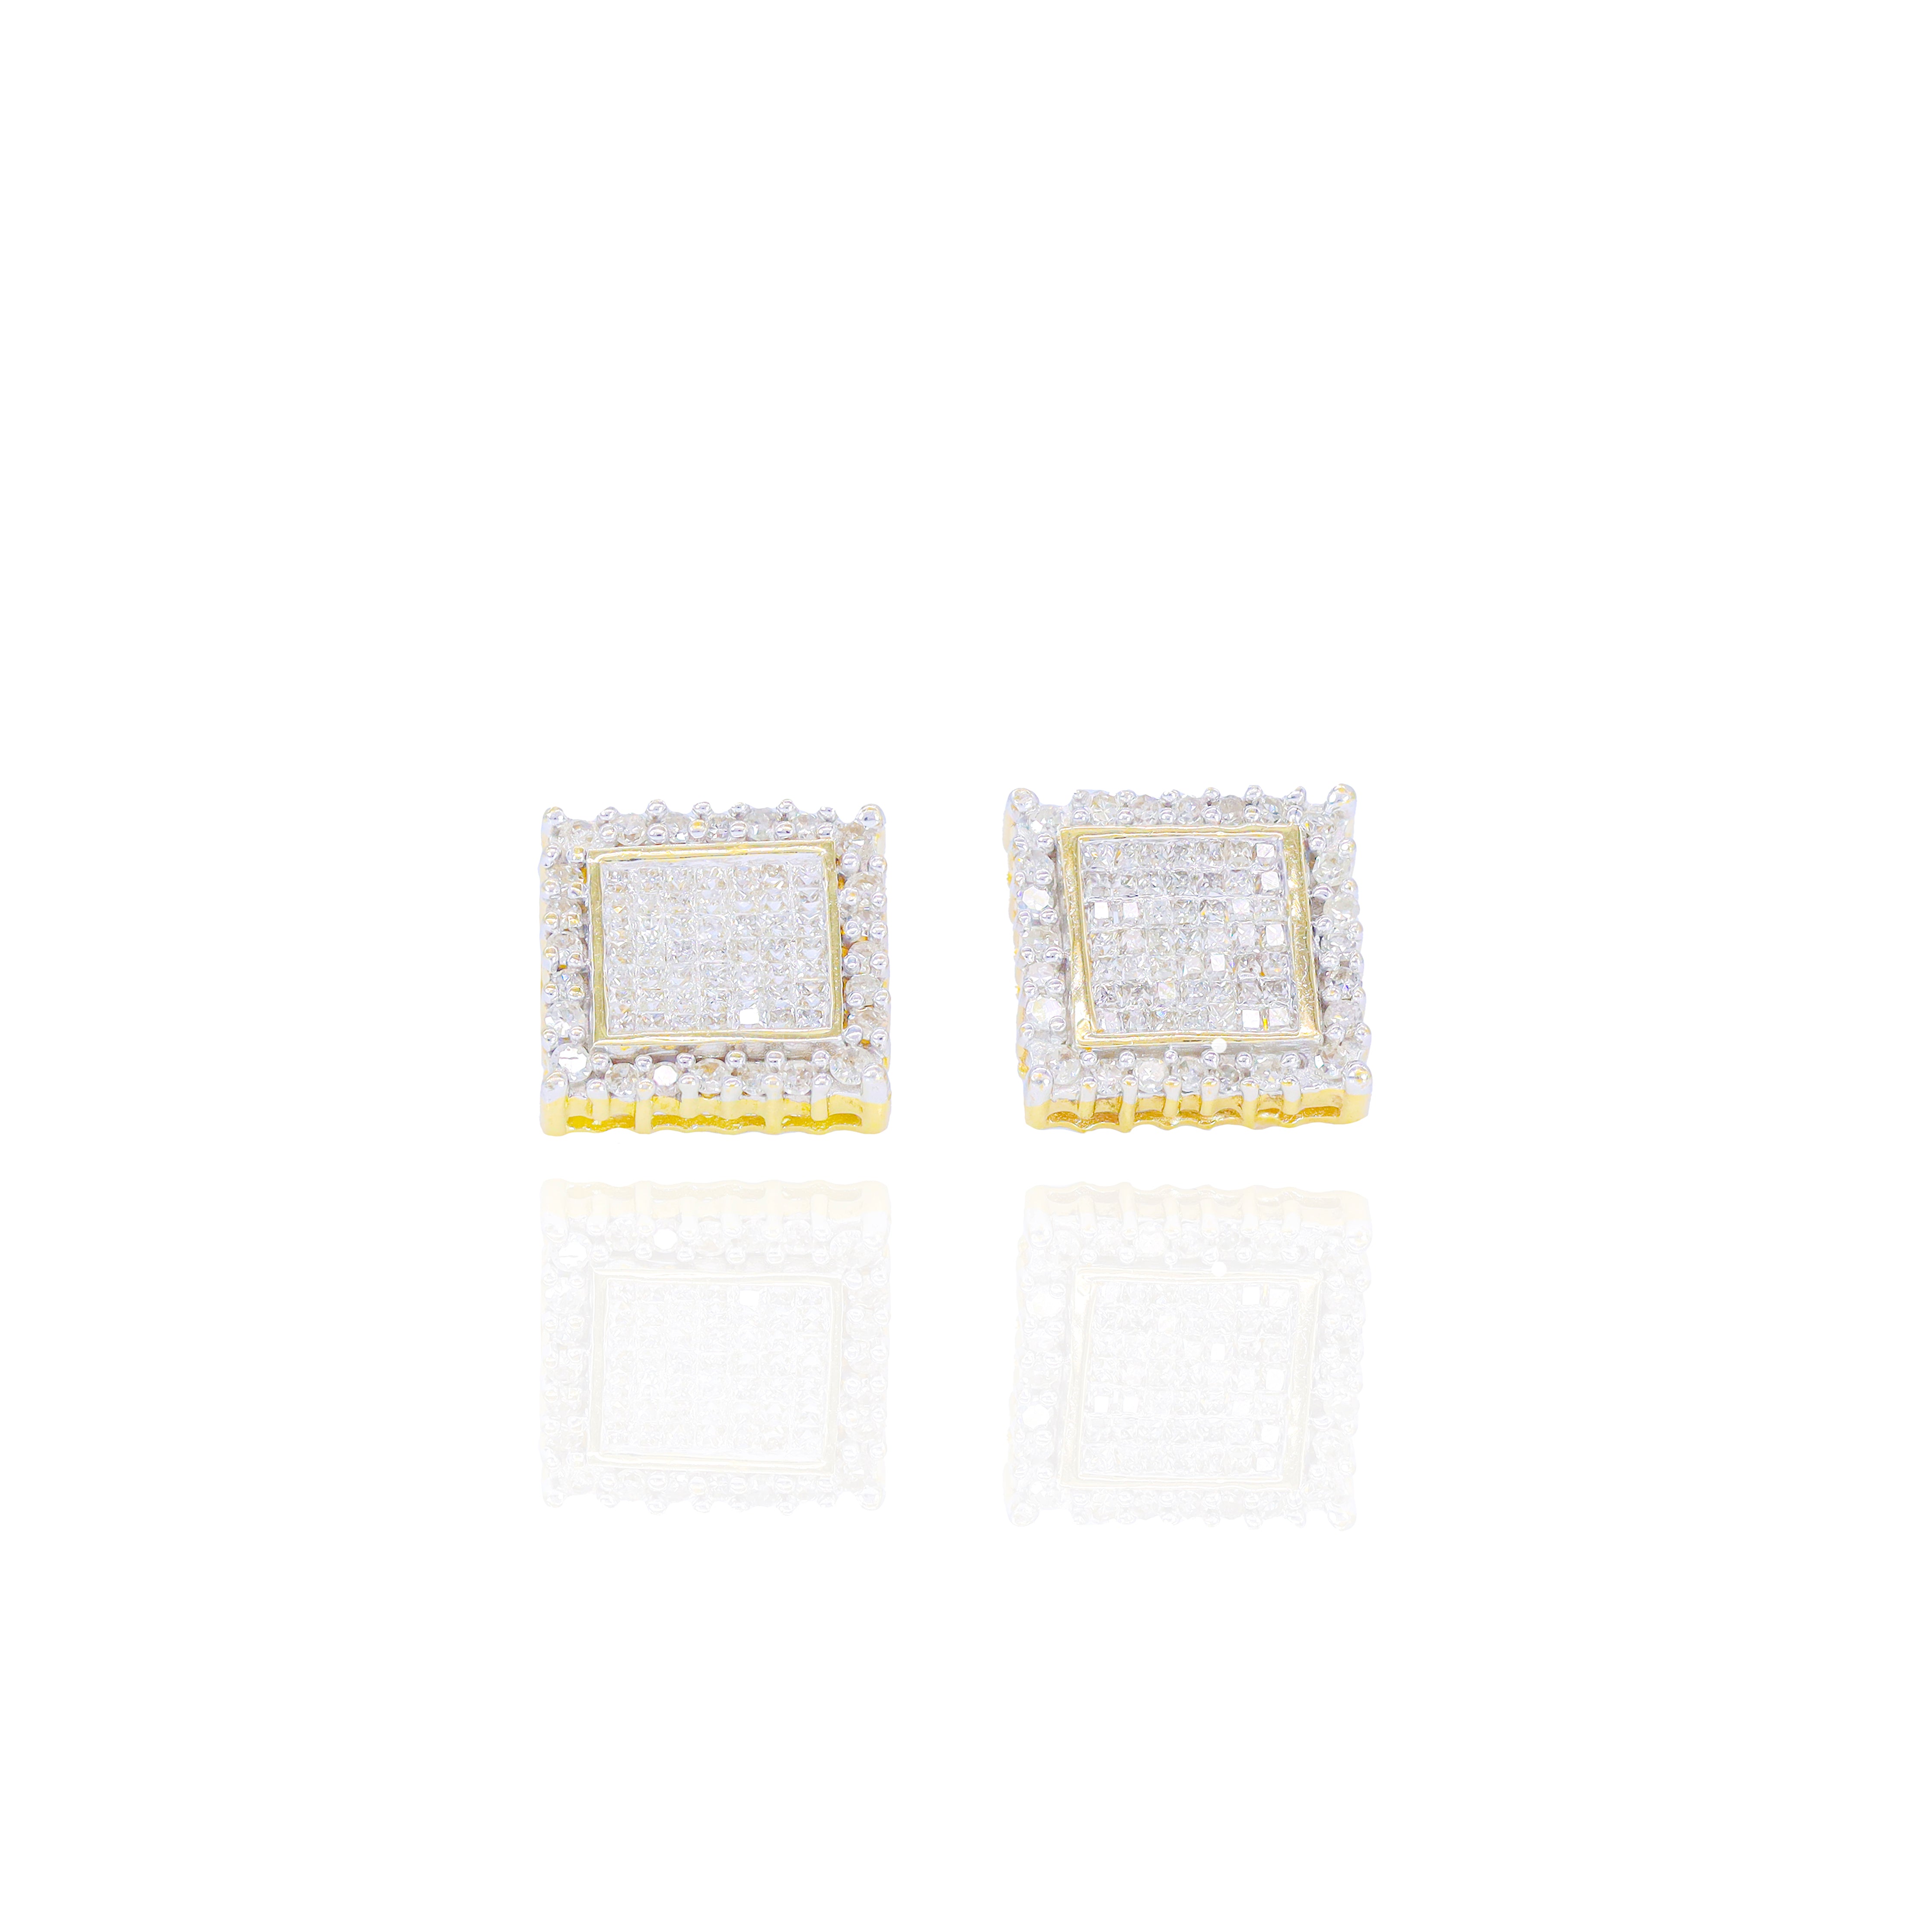 Square Princess Cut Diamond Cluster Earrings